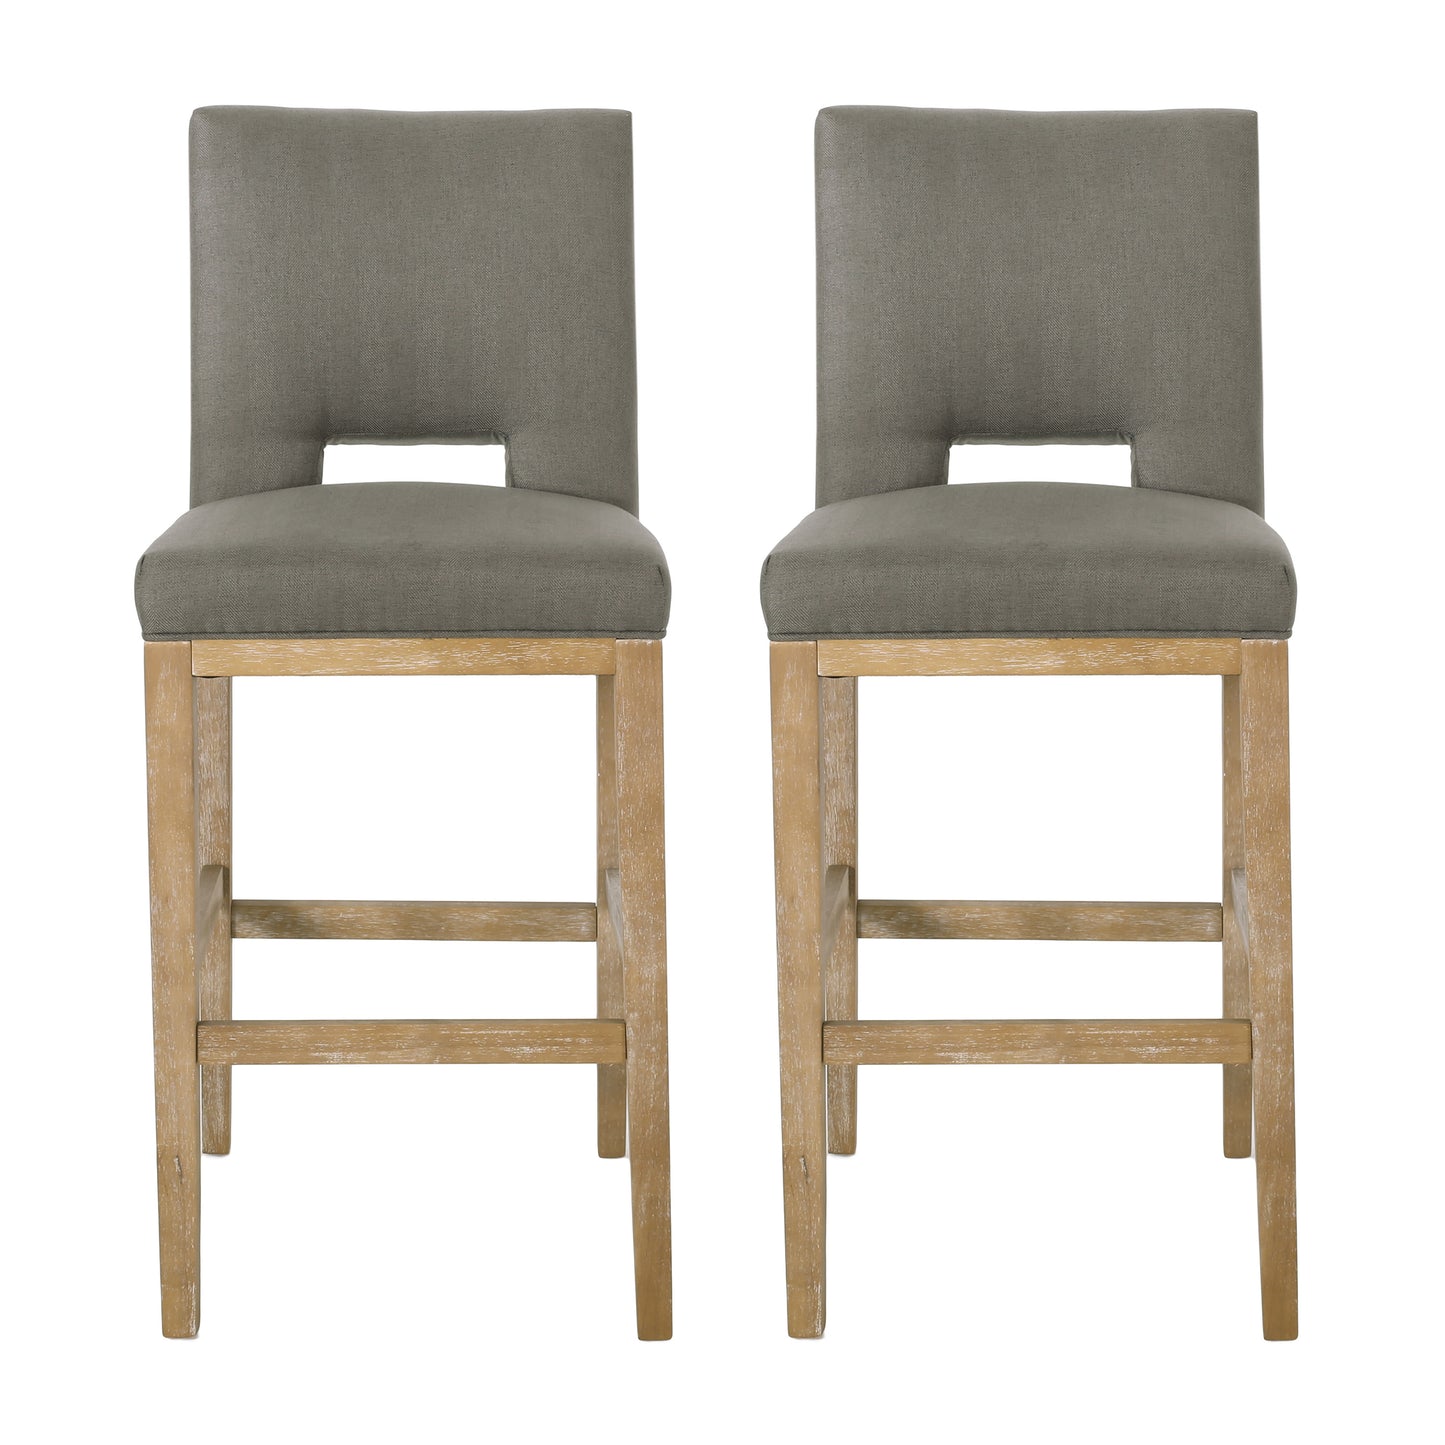 Kiara Contemporary Fabric Upholstered 31 Inch Barstools (Set of 2)